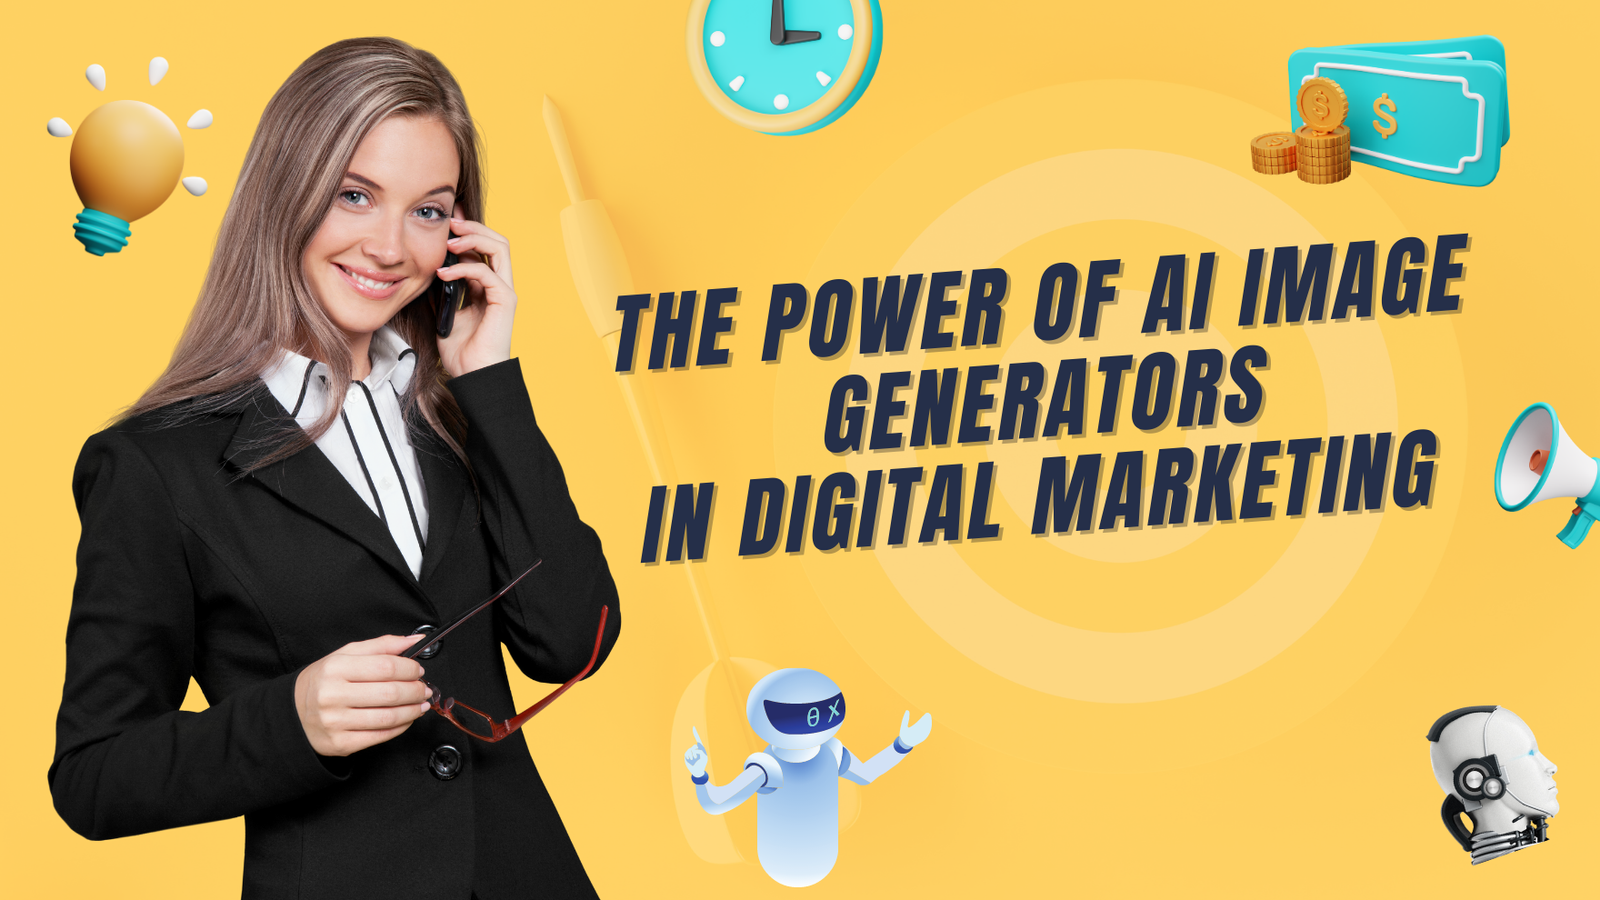 The Power Of AI Image Generators in Digital Marketing